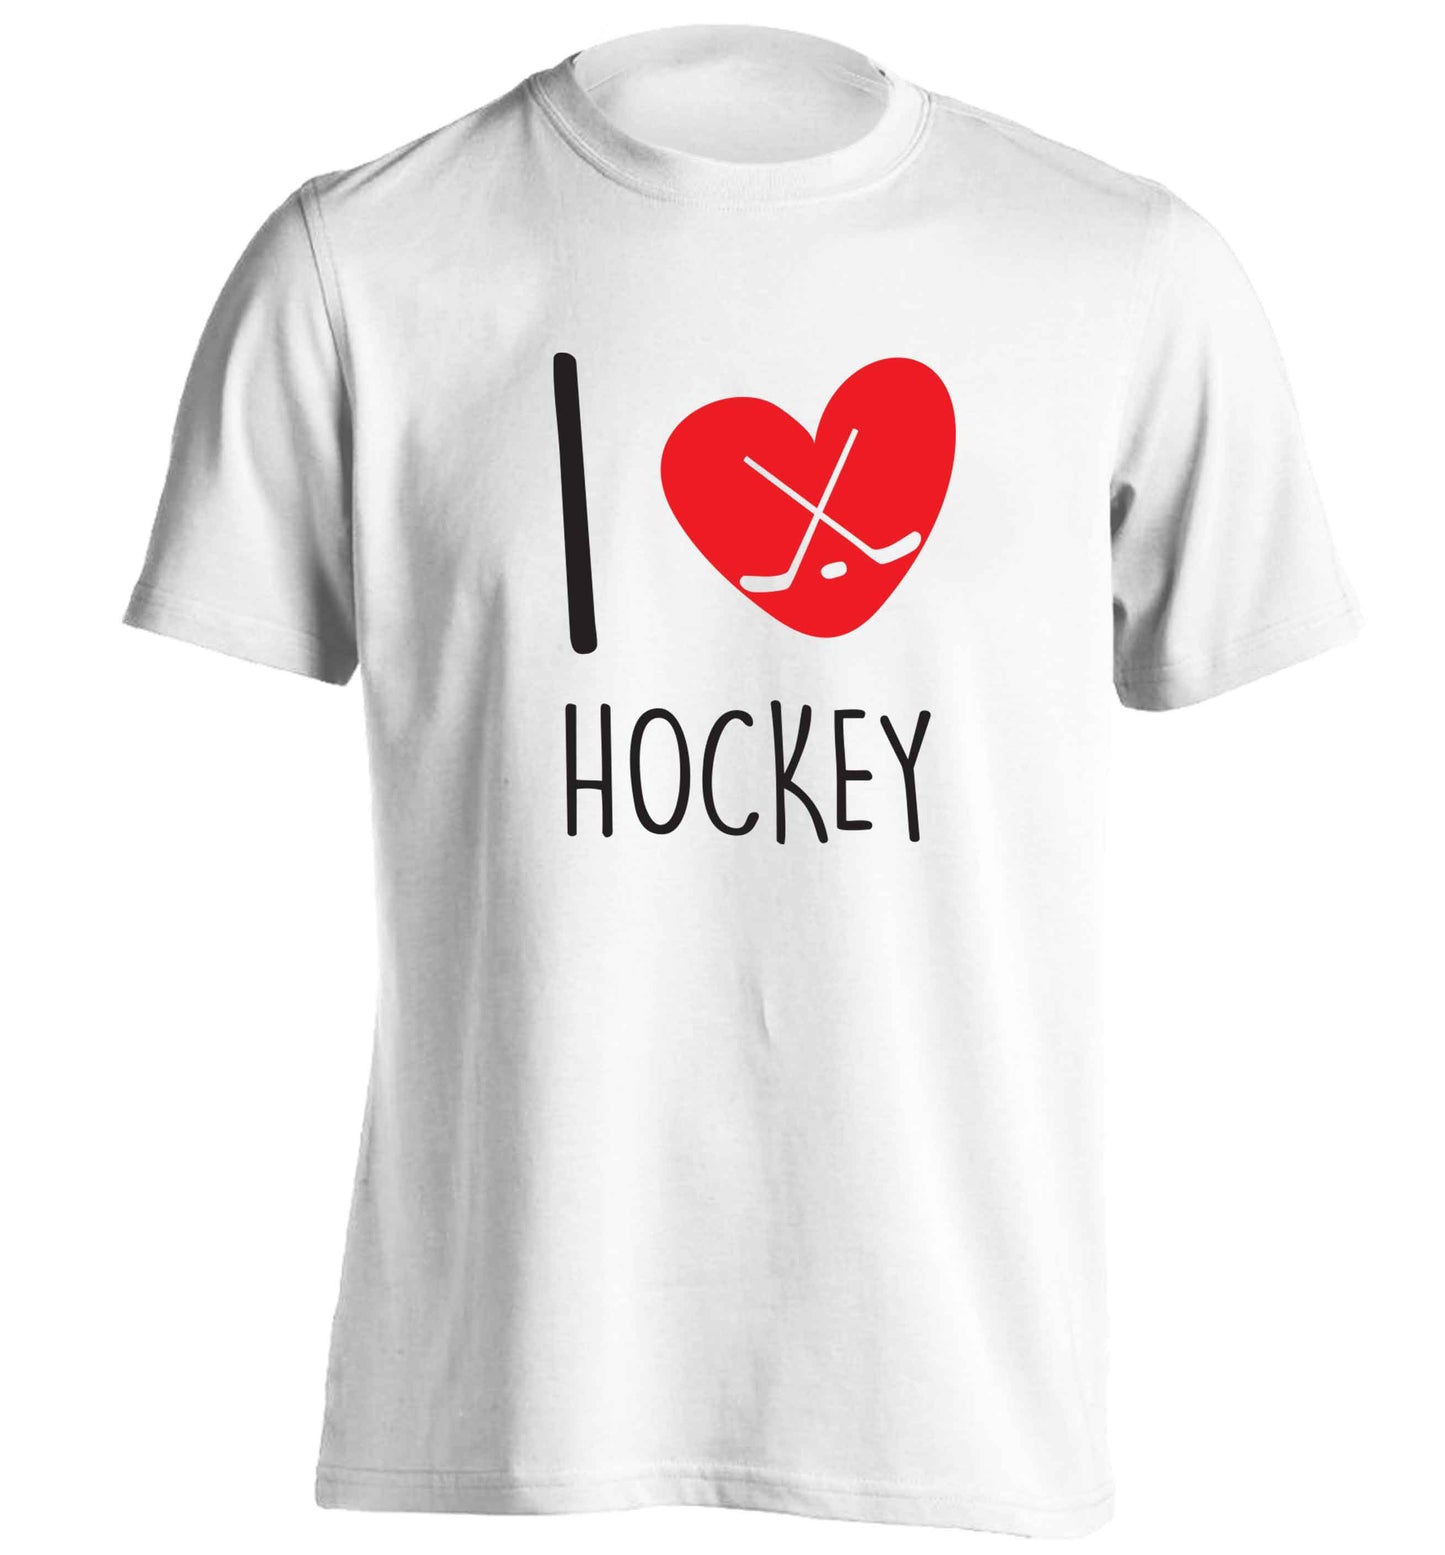 I love hockey adults unisex white Tshirt 2XL